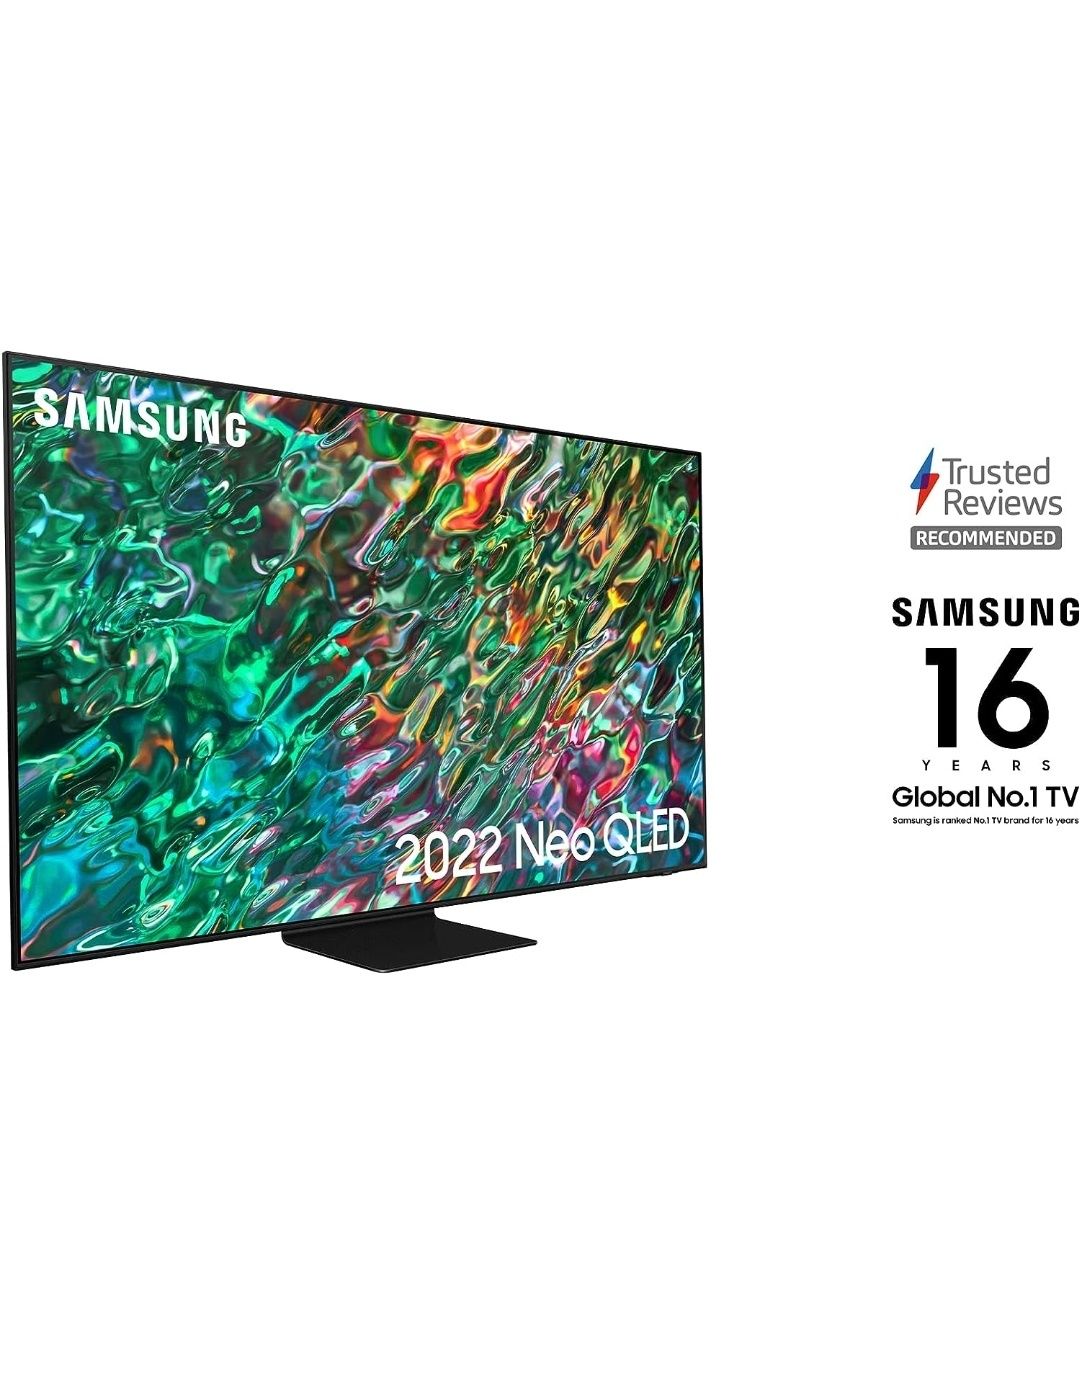 Samsung 55 Inch QN90B Neo QLED 4K Smart TV